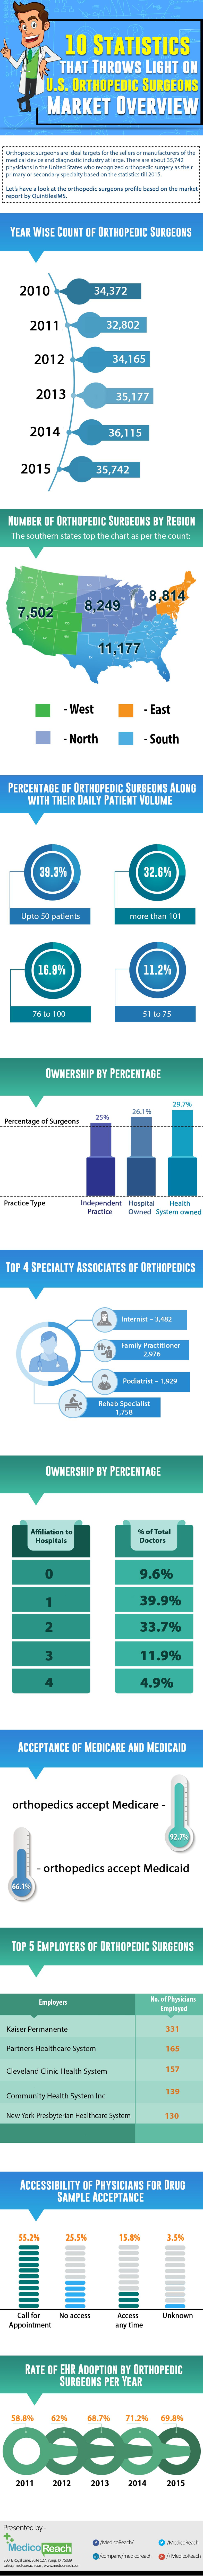 10 statistics that throw light on US orthopedic surgeons market overview